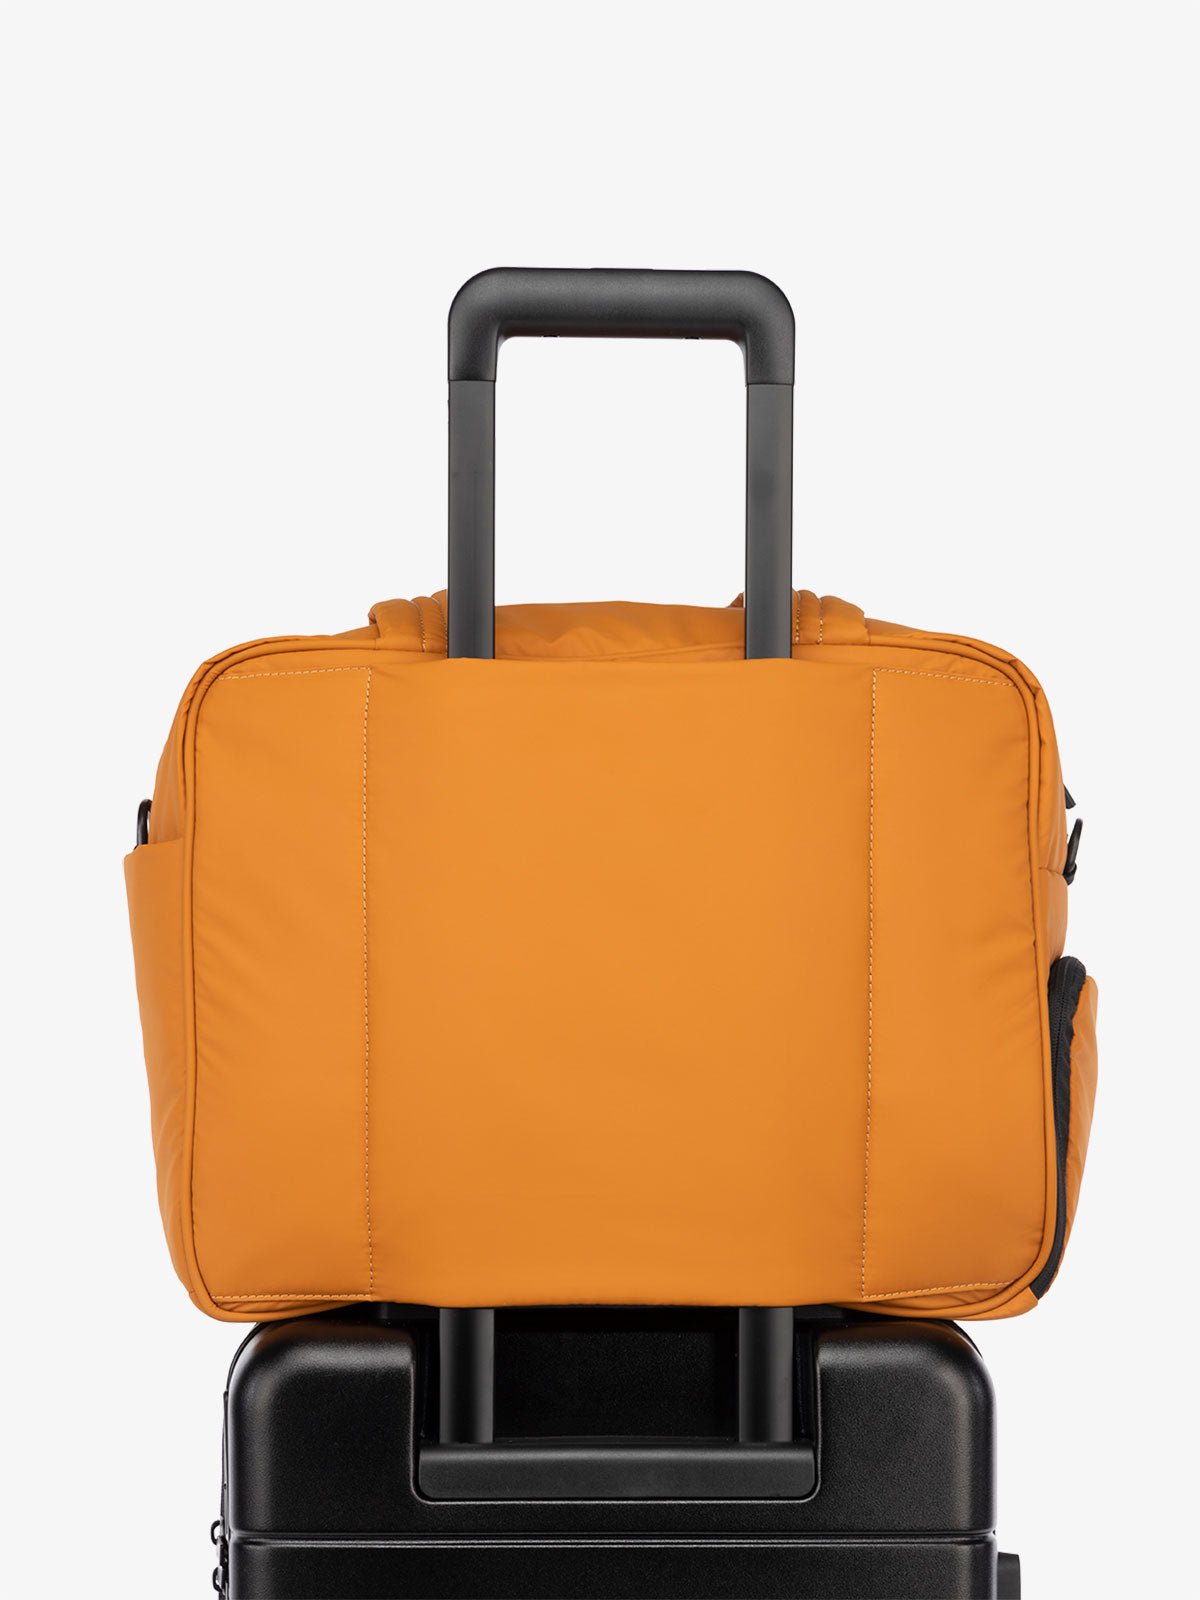 CALPAK Luka Duffle Bag luggage sleeve in pumpkin